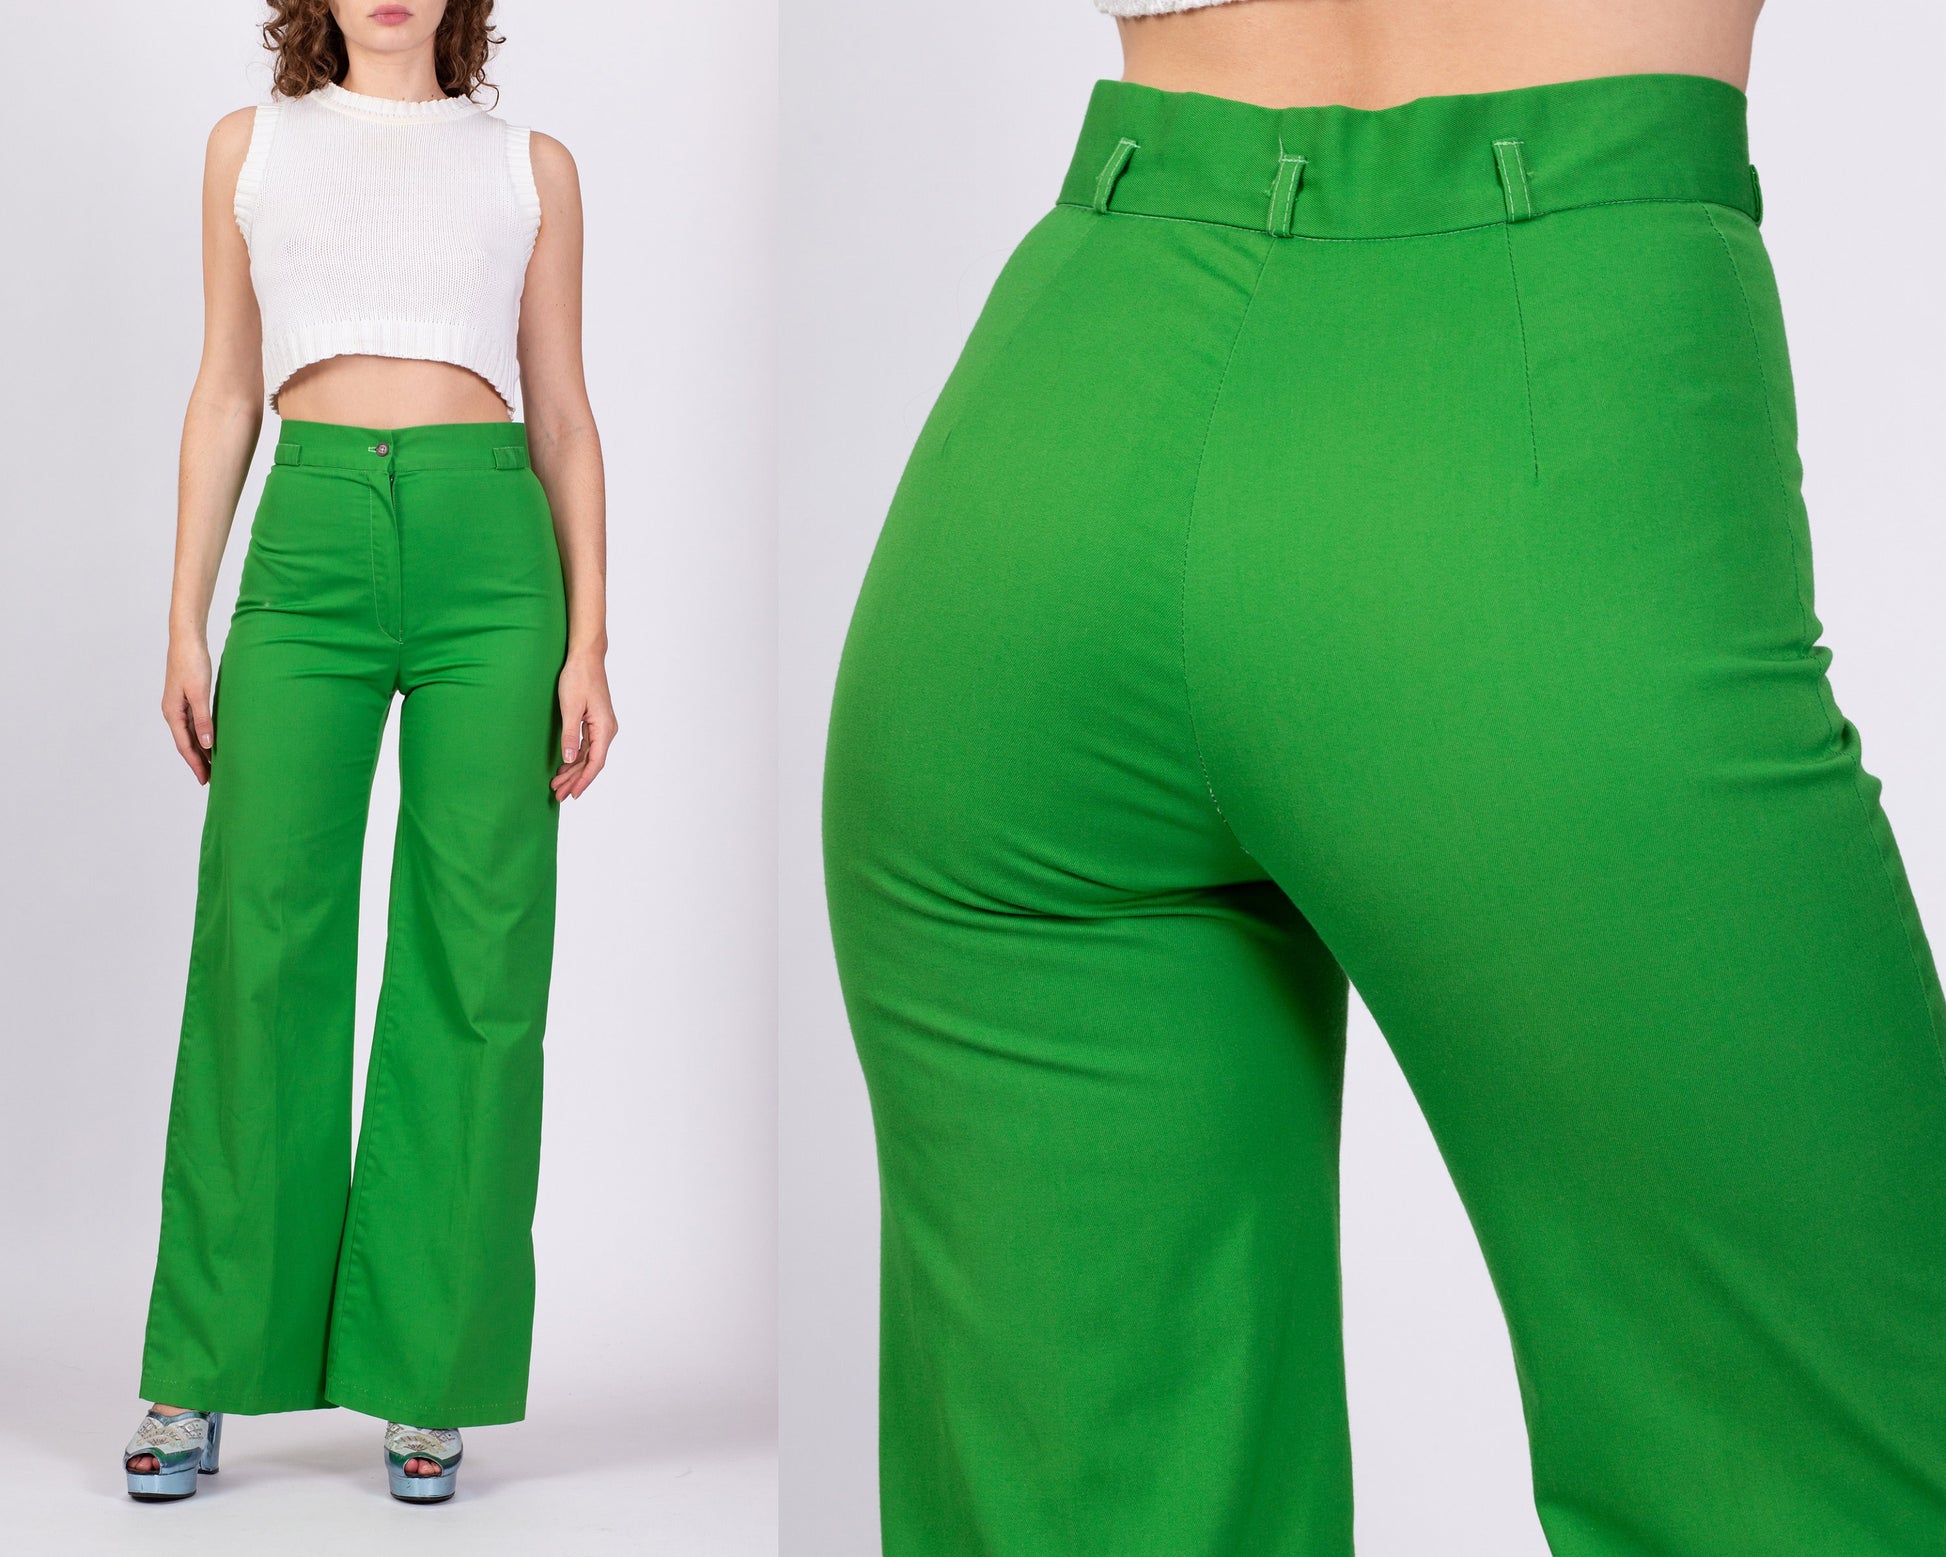  Green High Waisted Pants